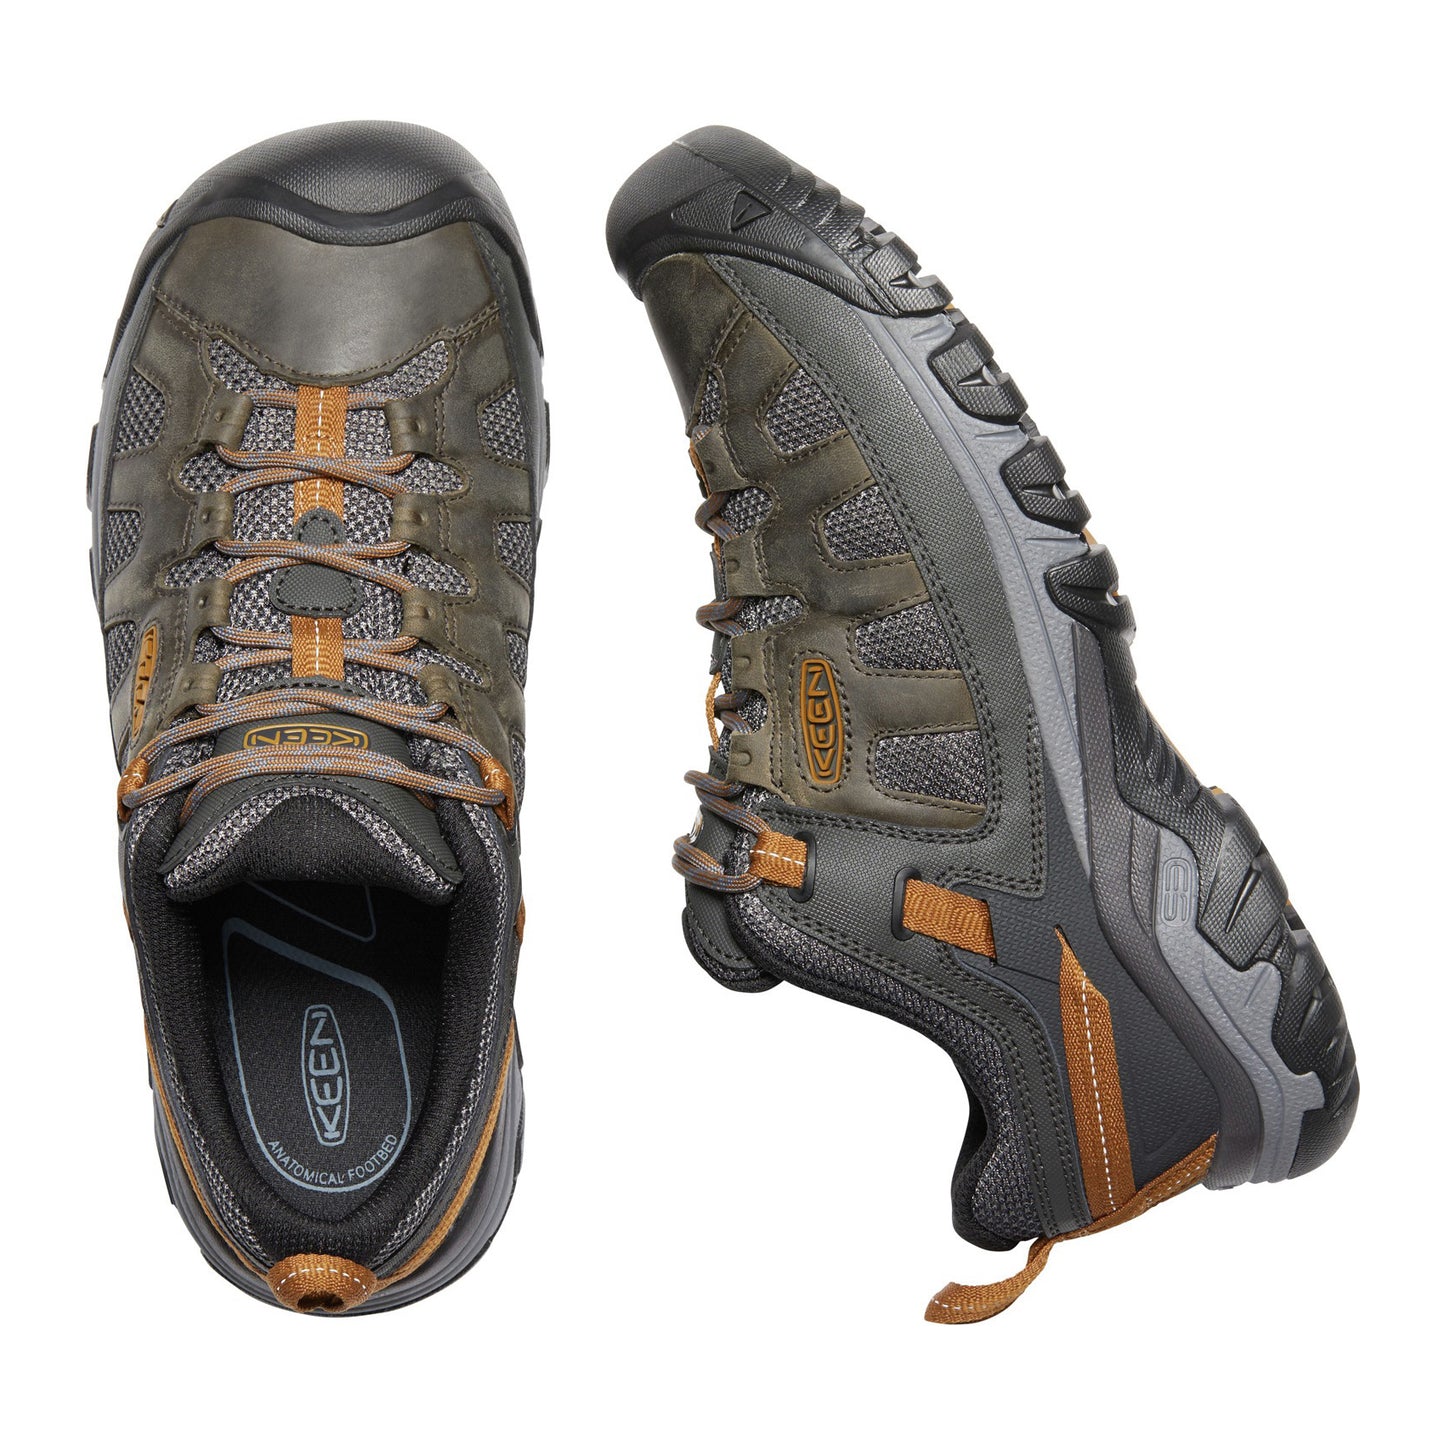 Men's Targhee Vent Trail Shoe - Raven/Bronze Brown - Regular (D)